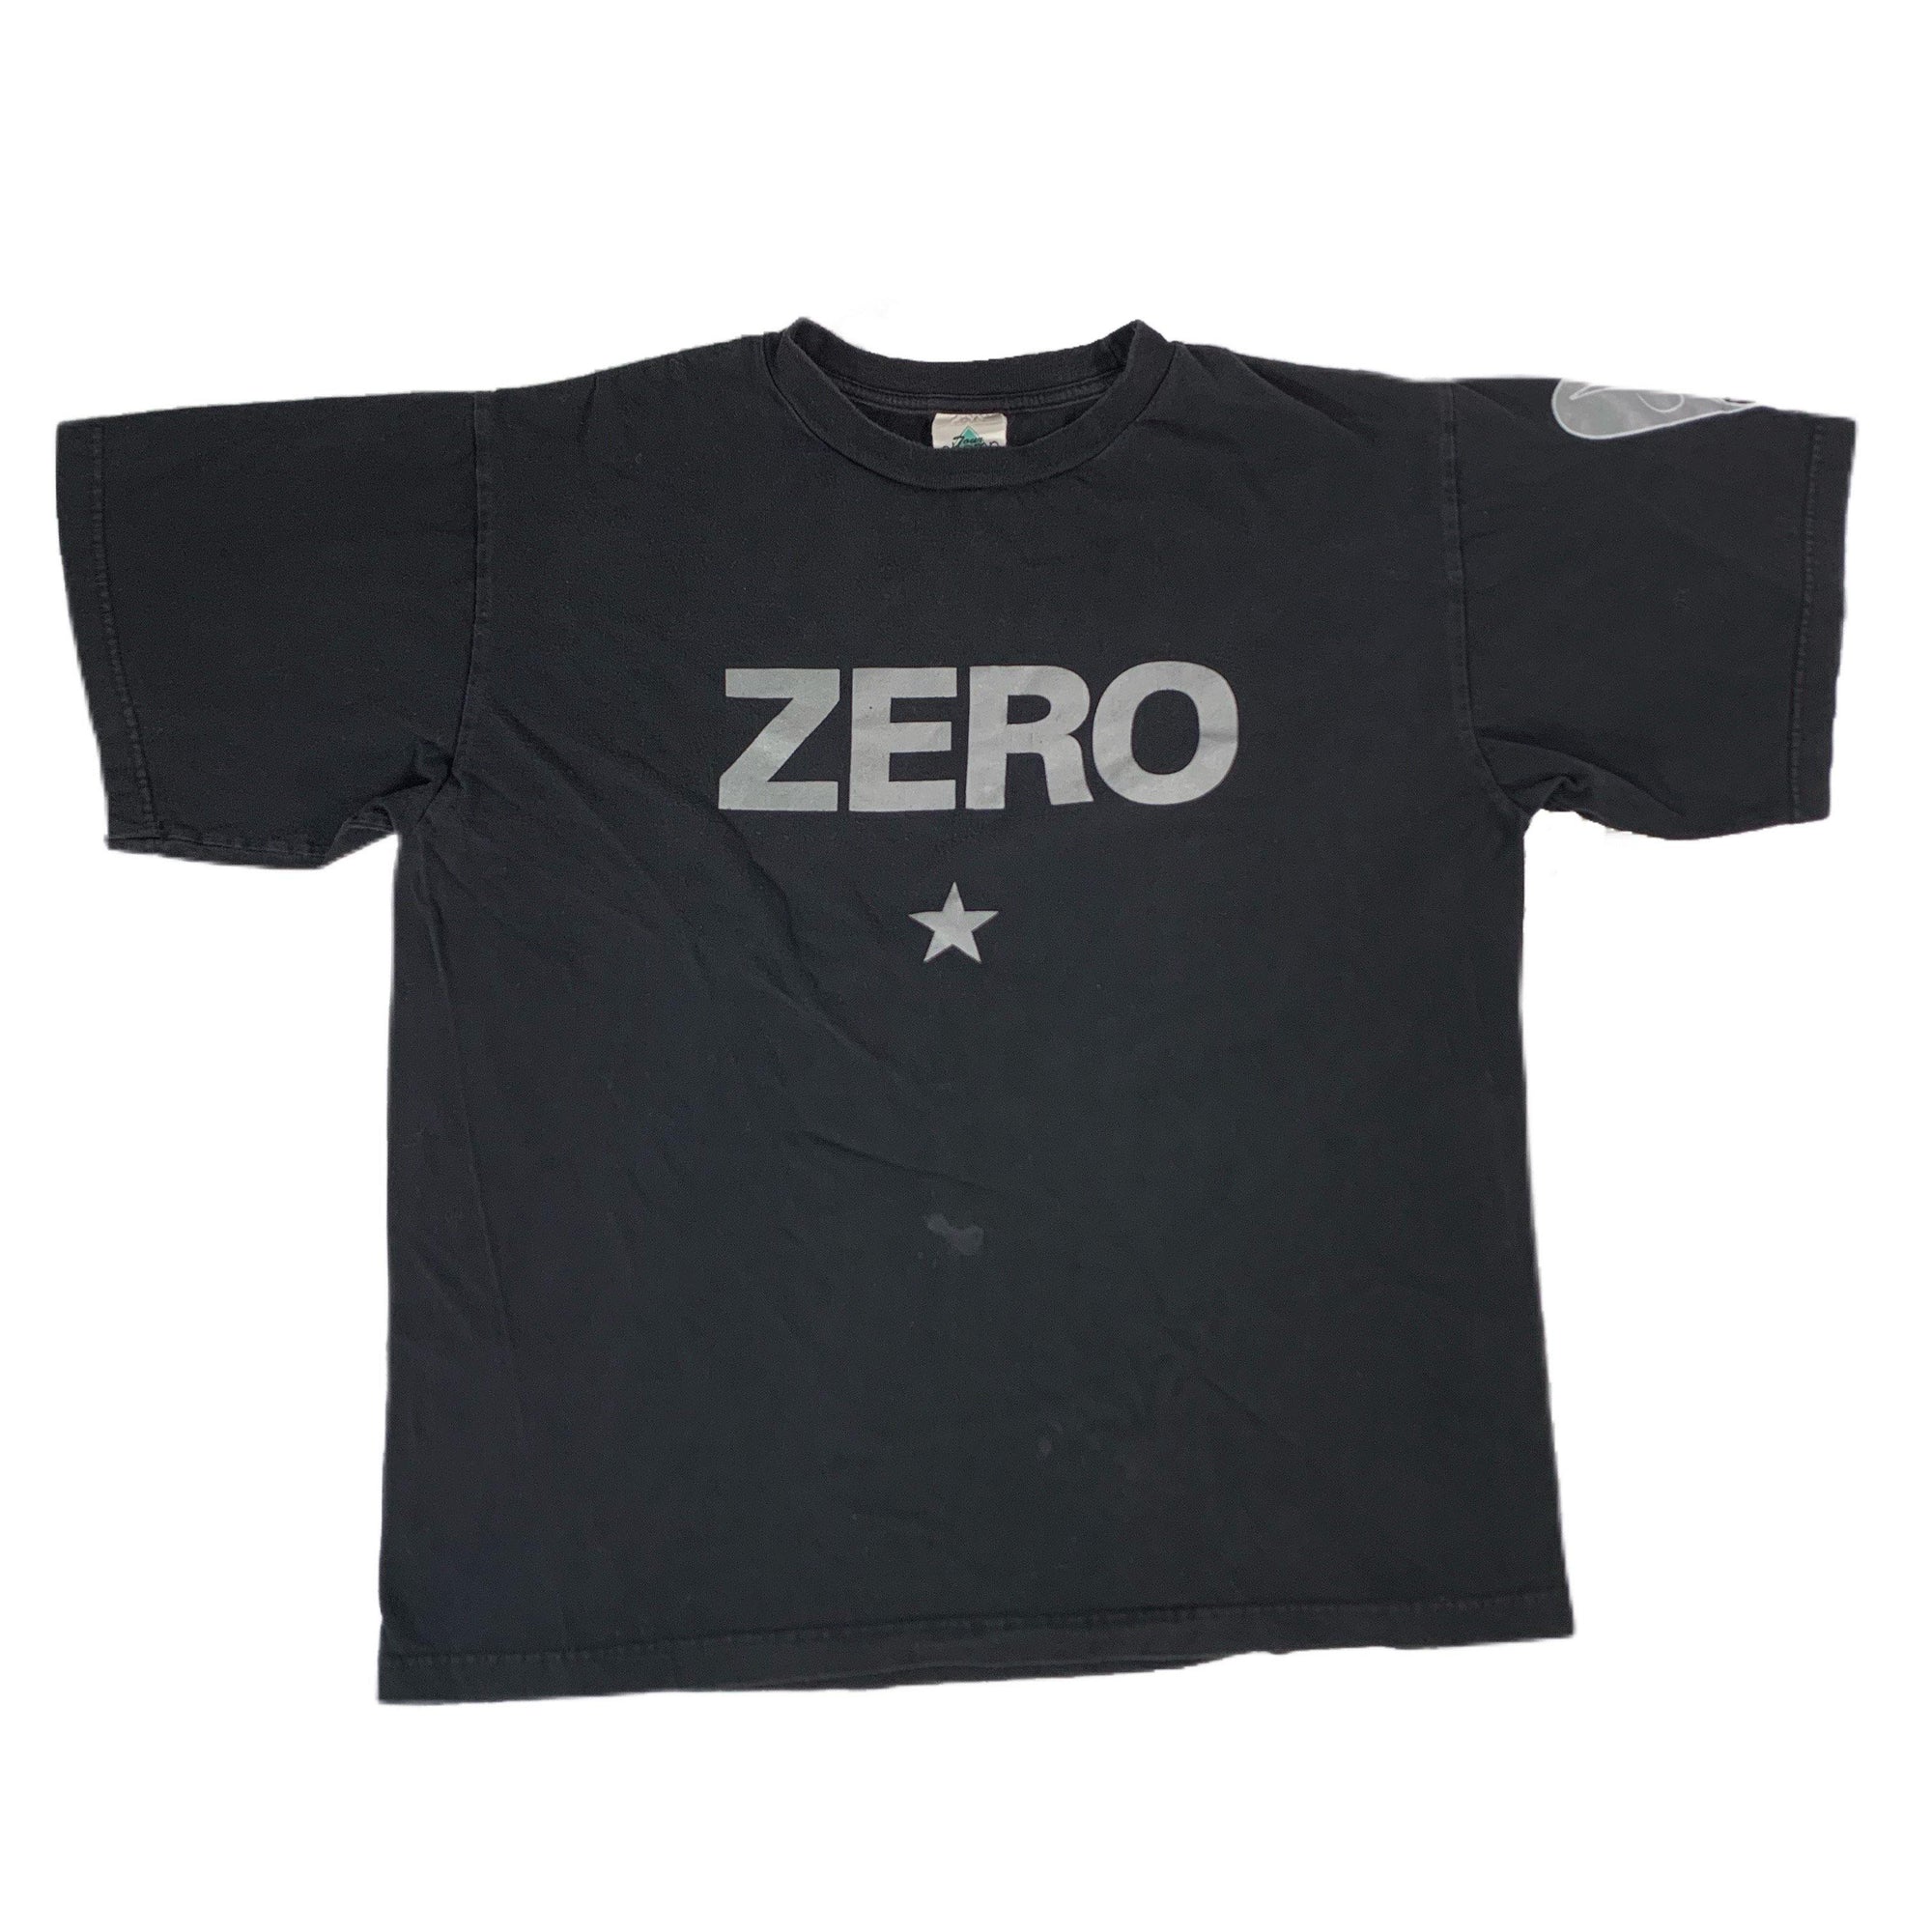 Vintage Smashing Pumpkins "Zero" T-Shirt - jointcustodydc